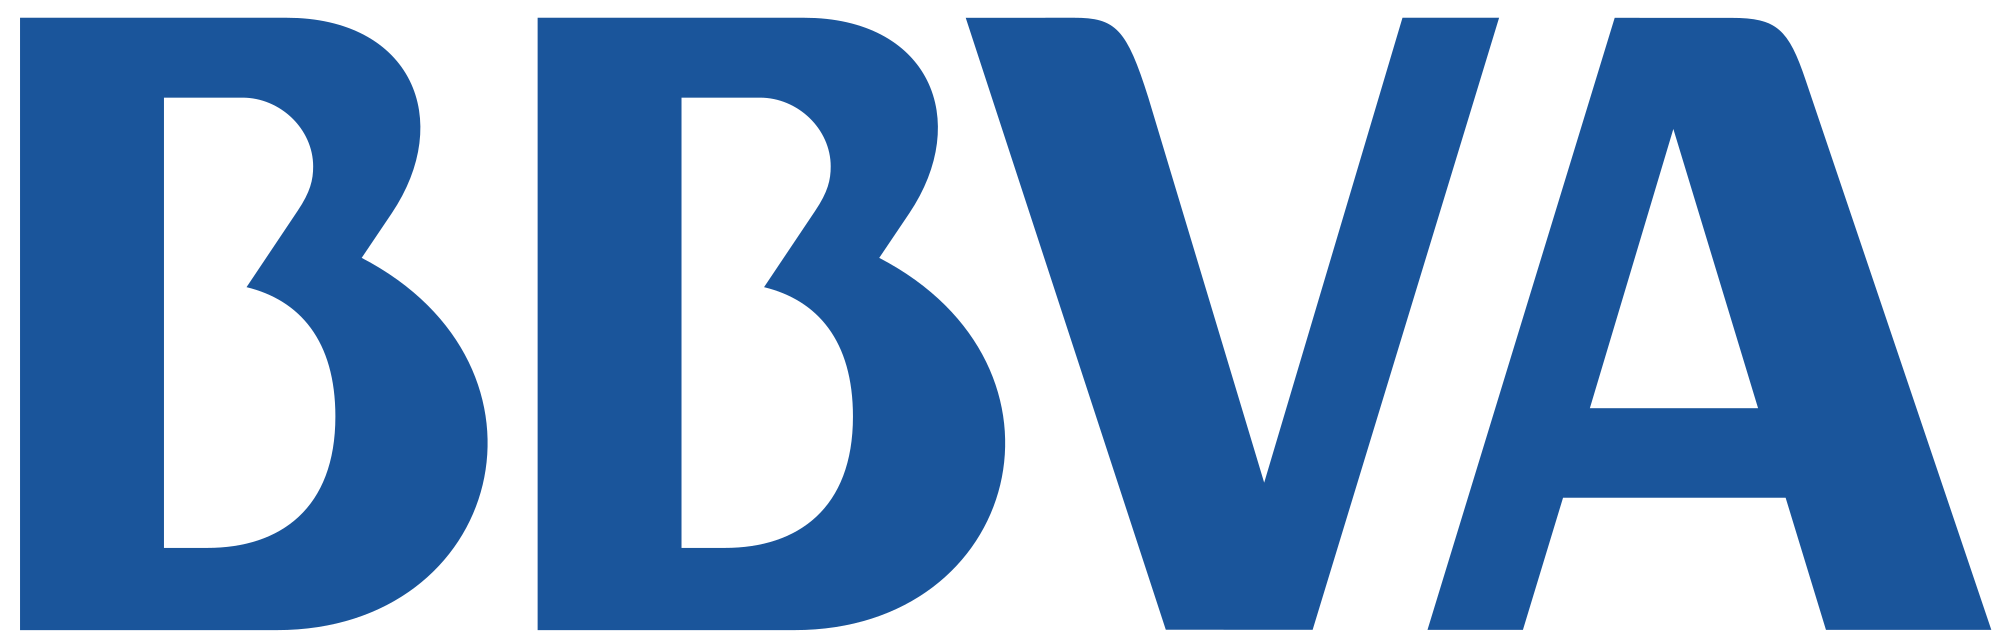 BBVA Logo - Logotipo de BBVA.svg